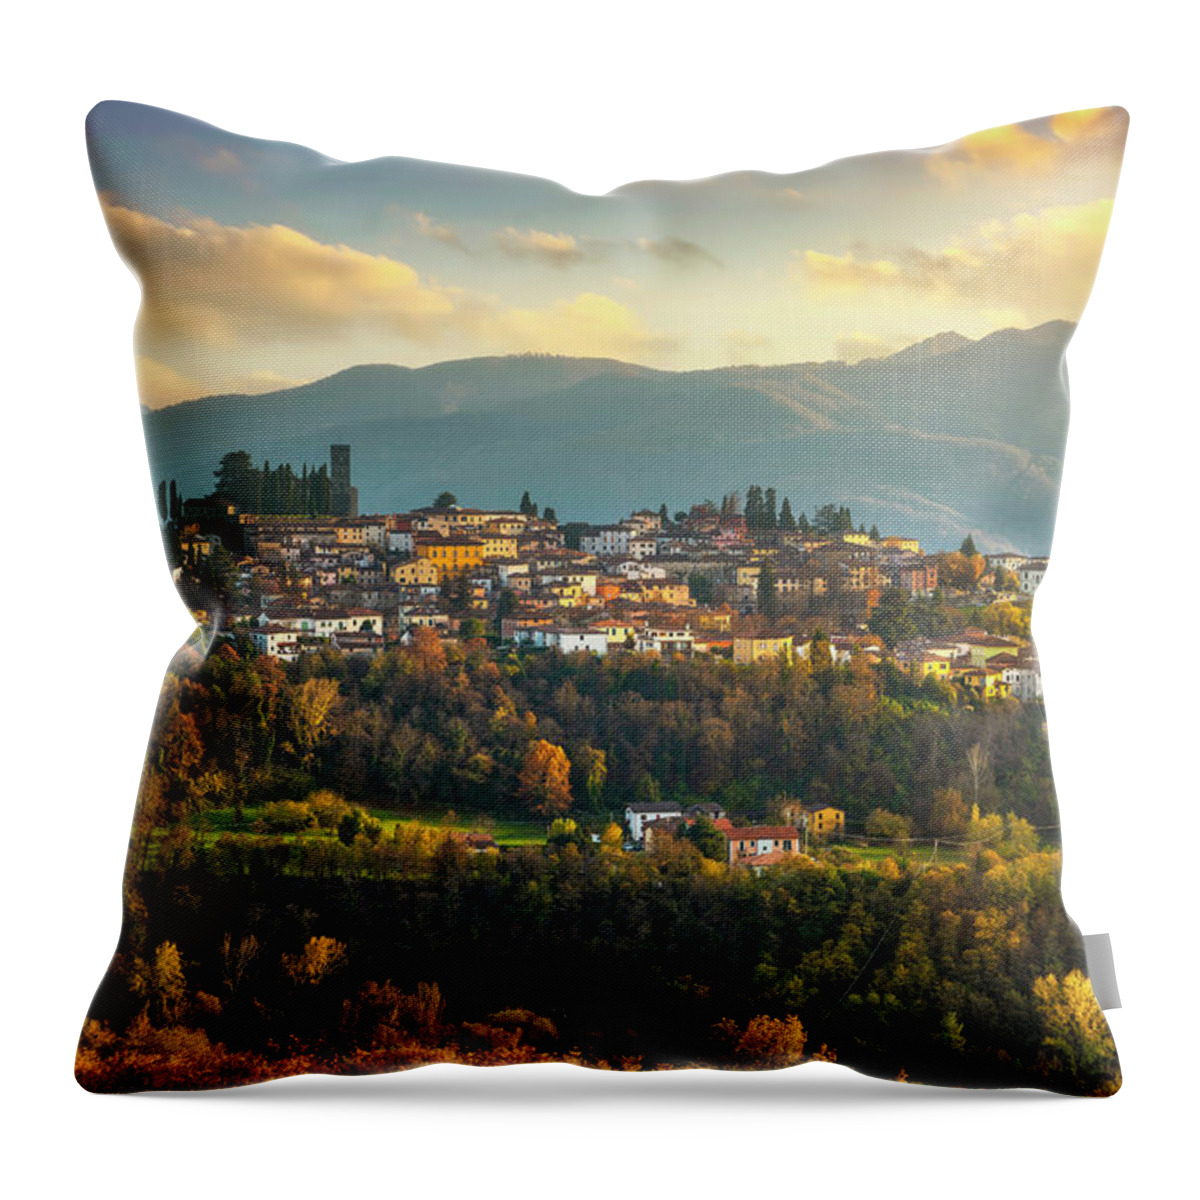 Barga Throw Pillow featuring the photograph Barga village in autumn. Garfagnana, Tuscany by Stefano Orazzini